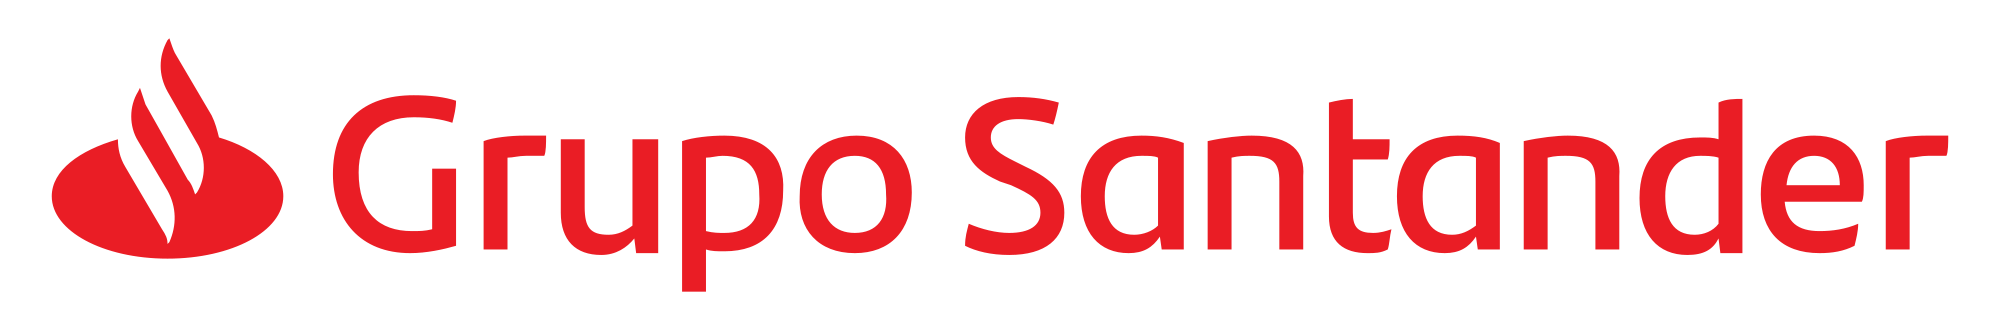 Grupo Santander Brand Logo